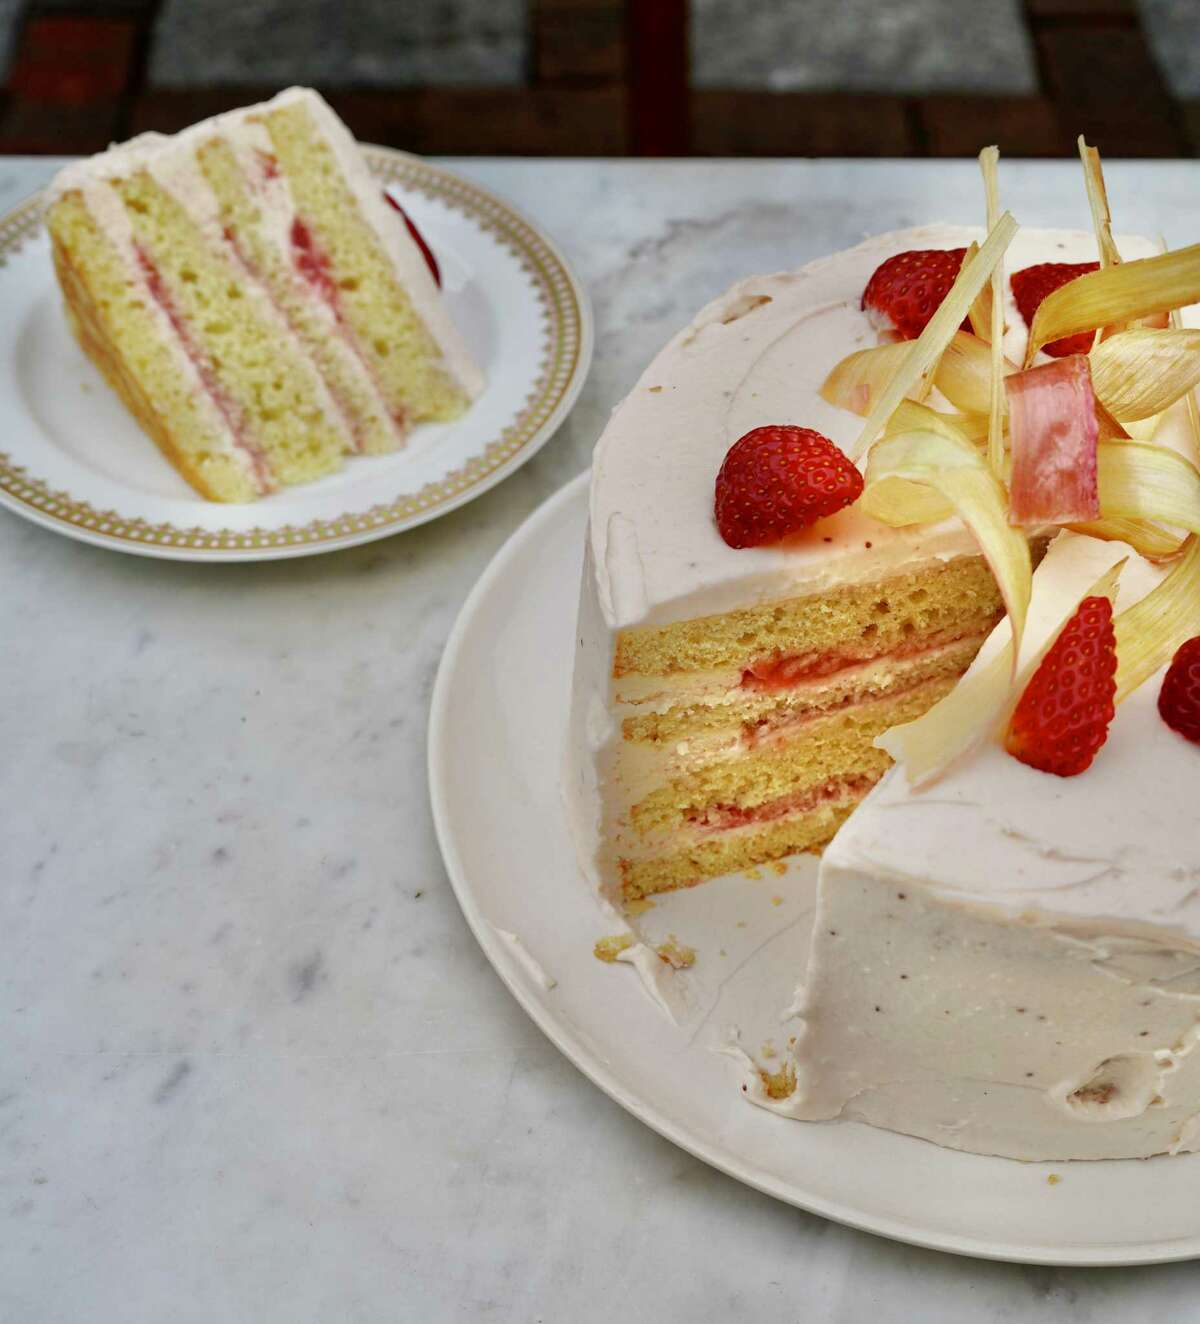 Jessica Battilana’s strawberry-rhubarb cake is a festive affair.